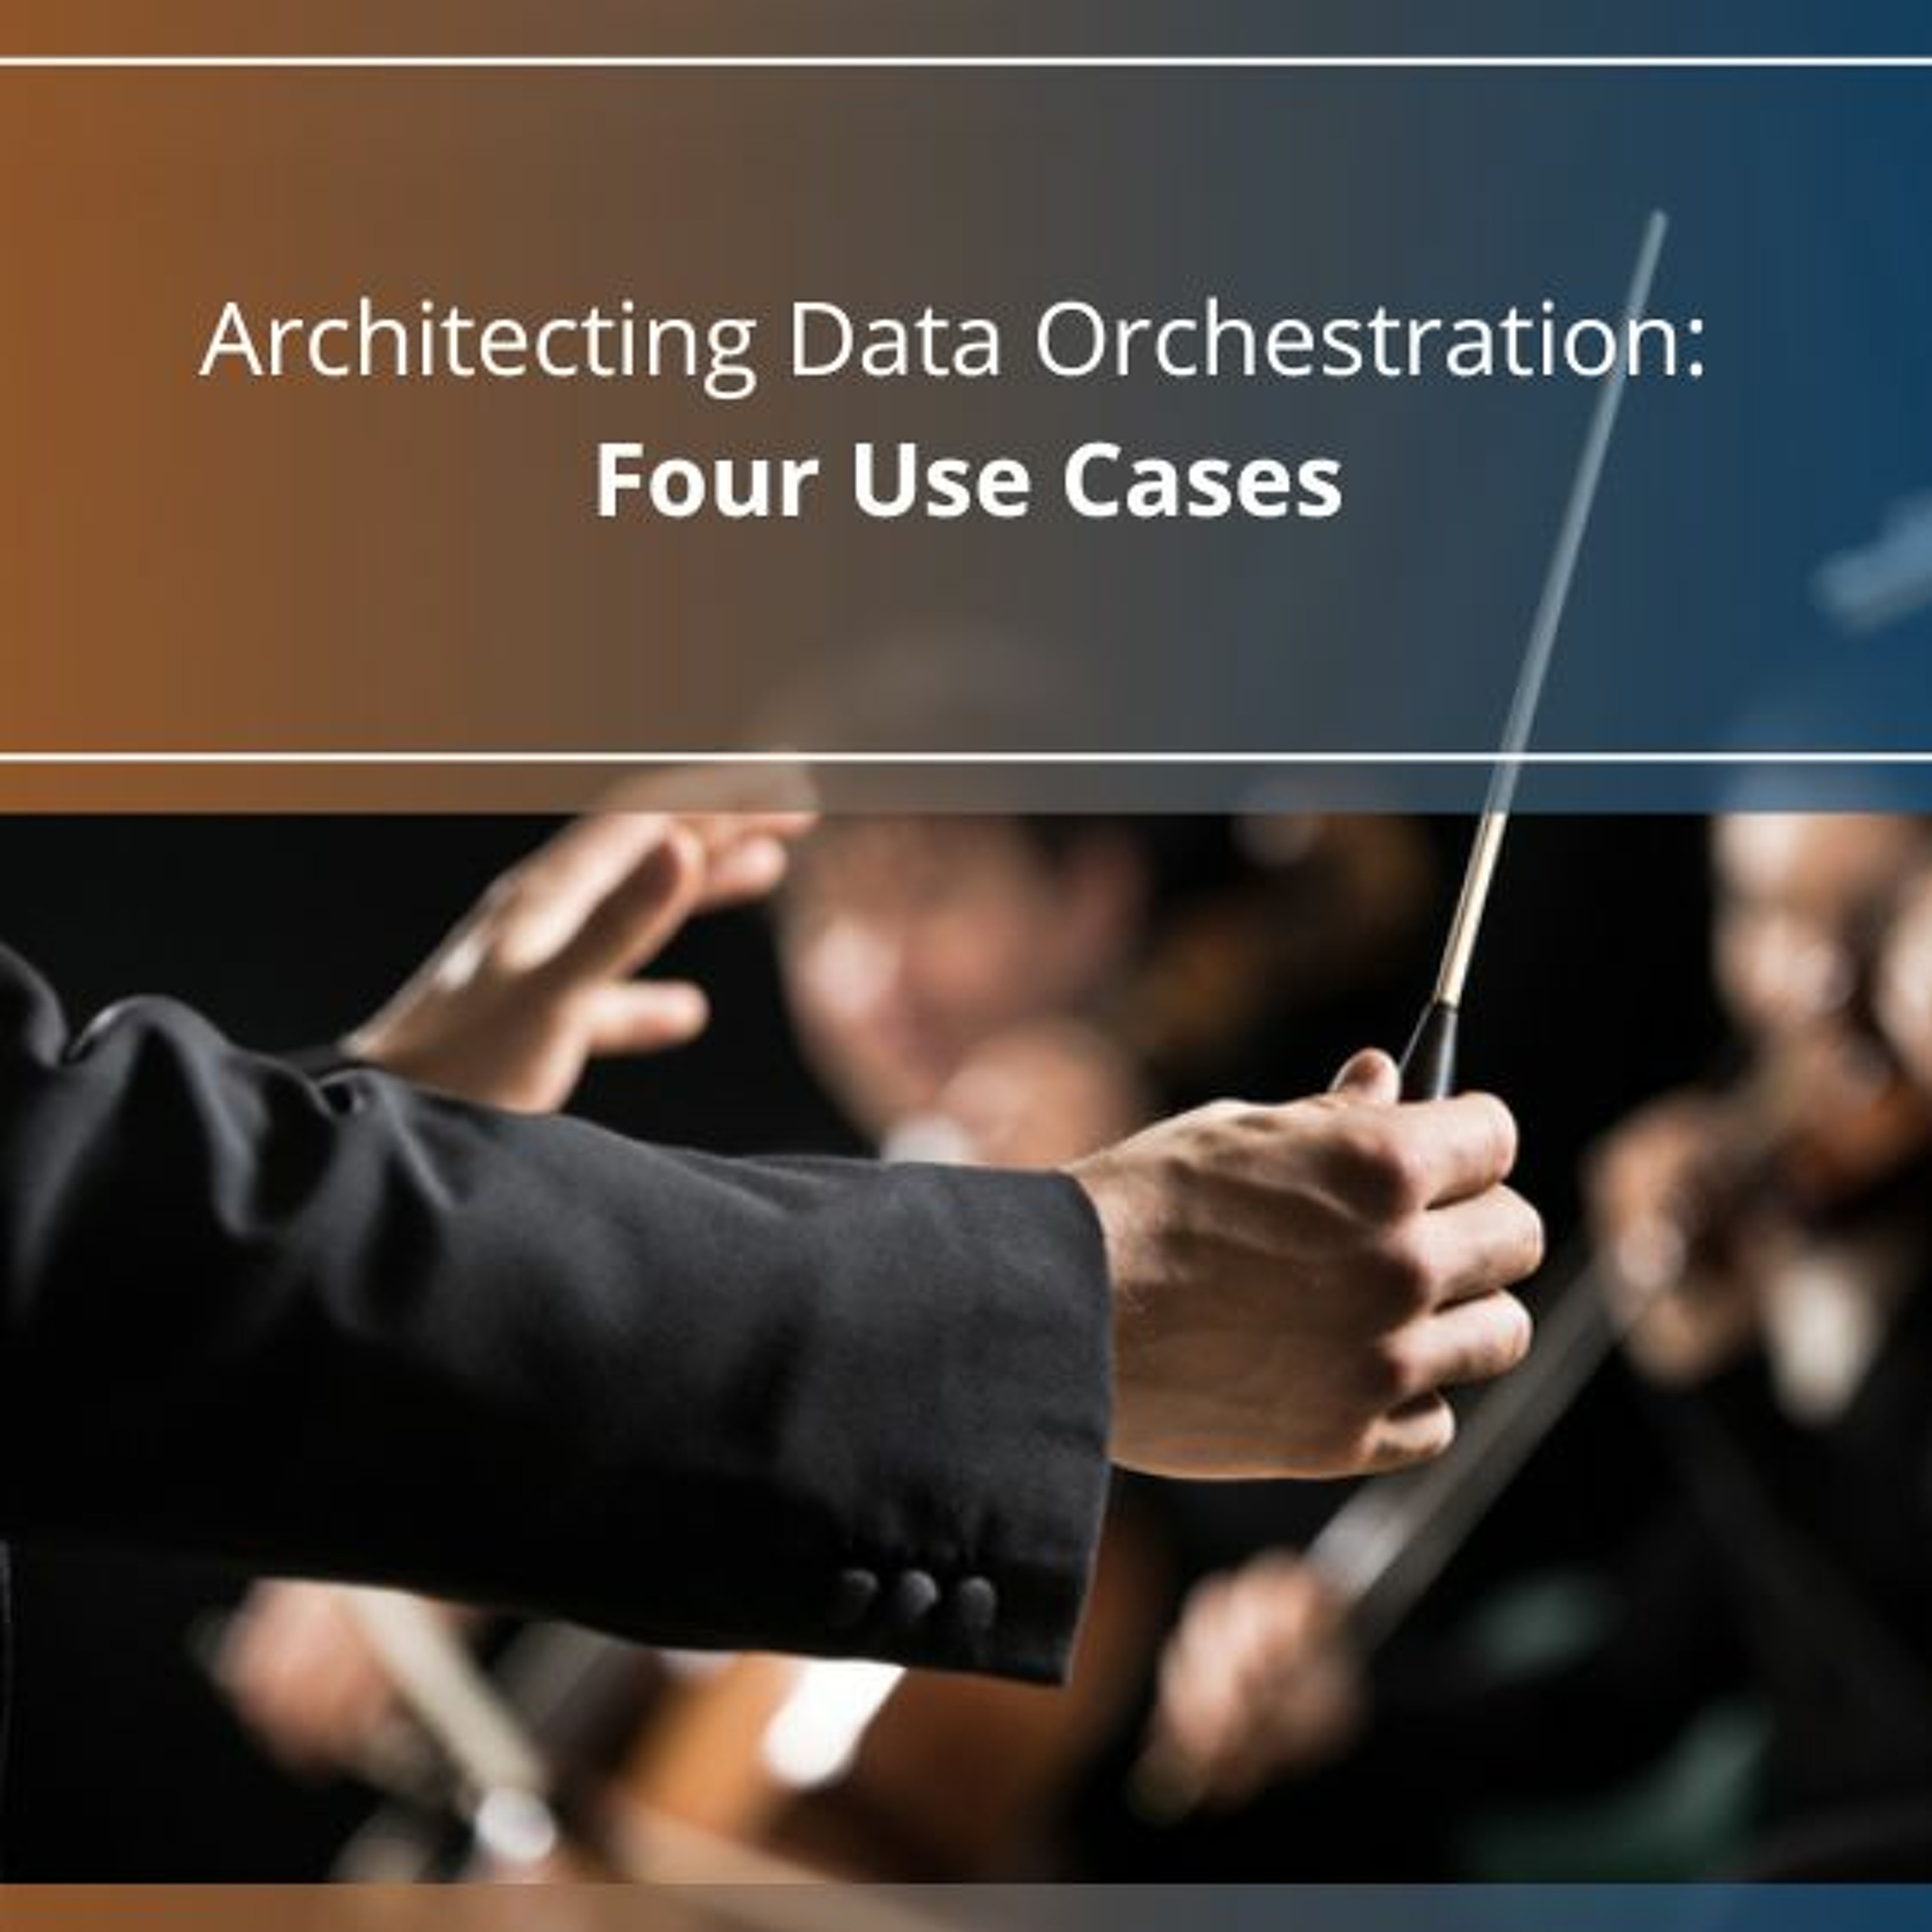 Architecting Data Orchestration: Four Use Cases - Audio Blog